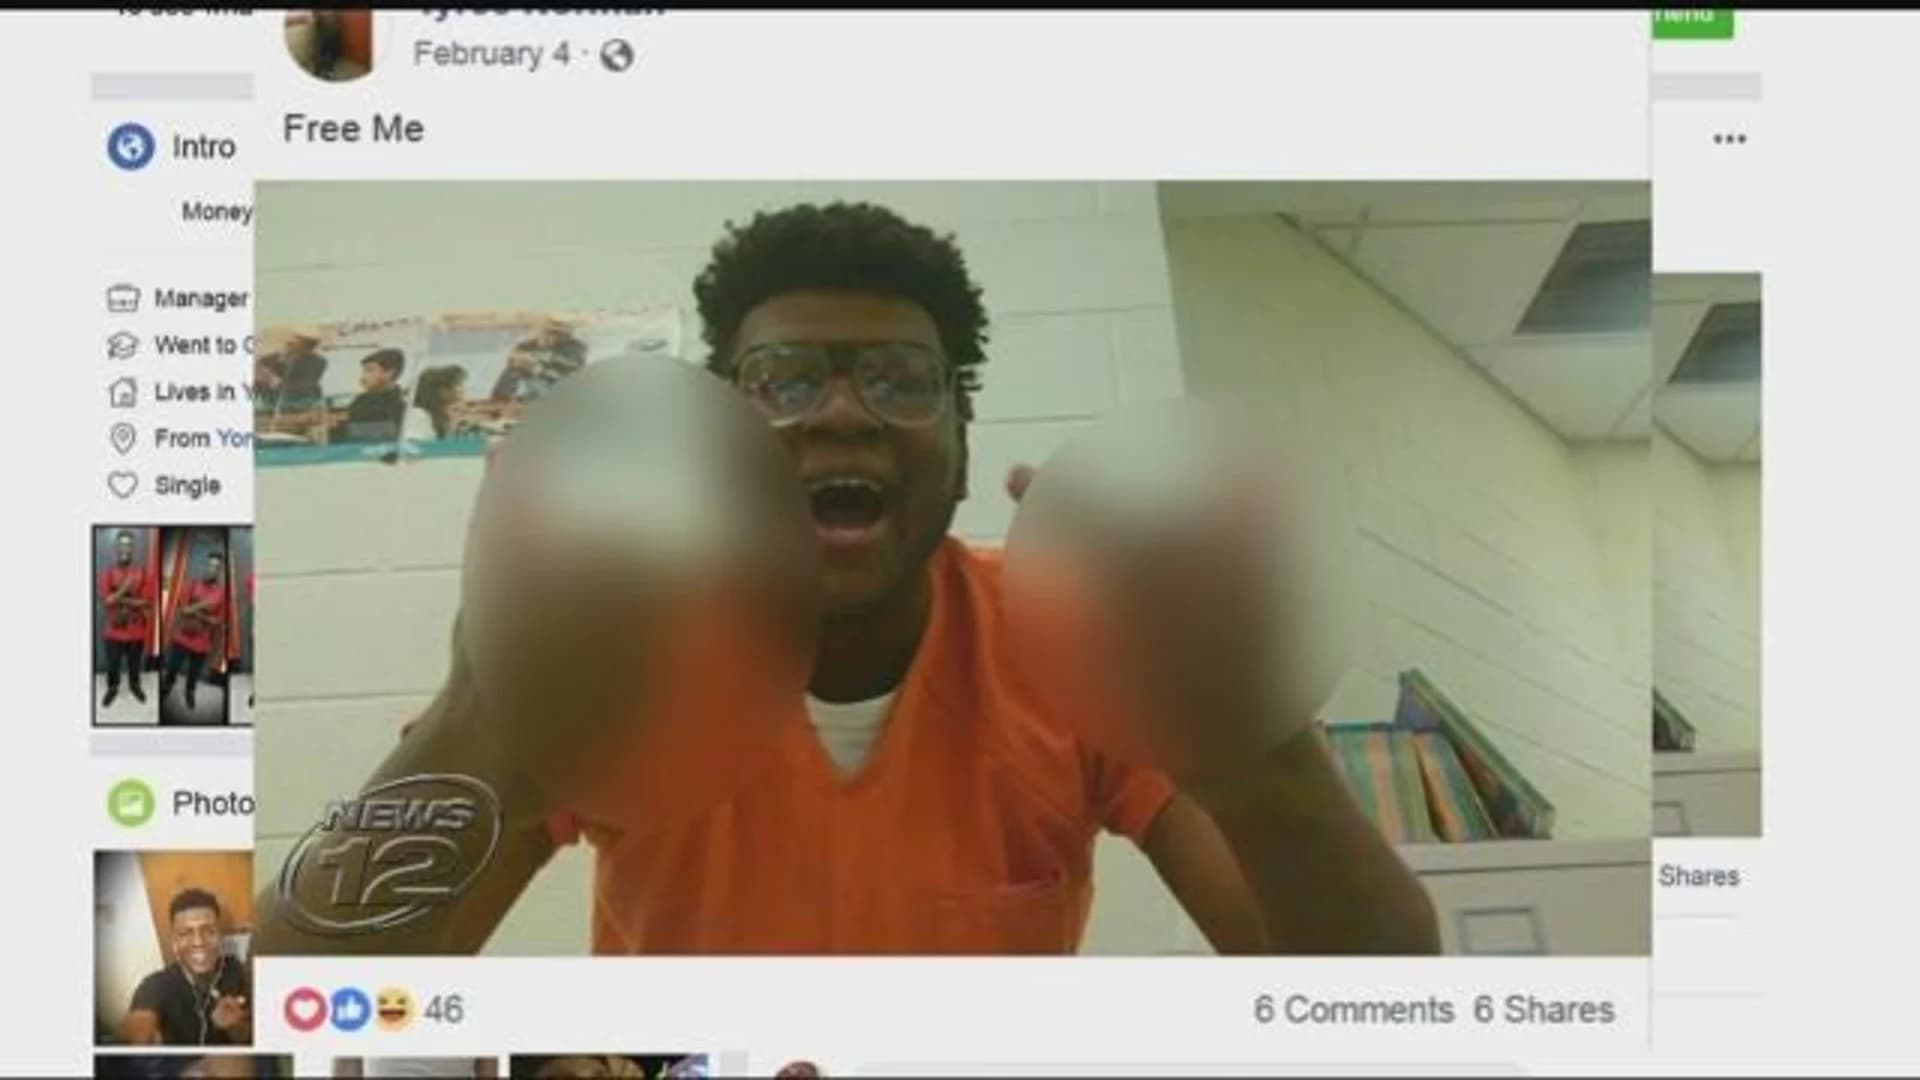 Jailhouse selfies: Inmates used classroom computers to post pics on social media